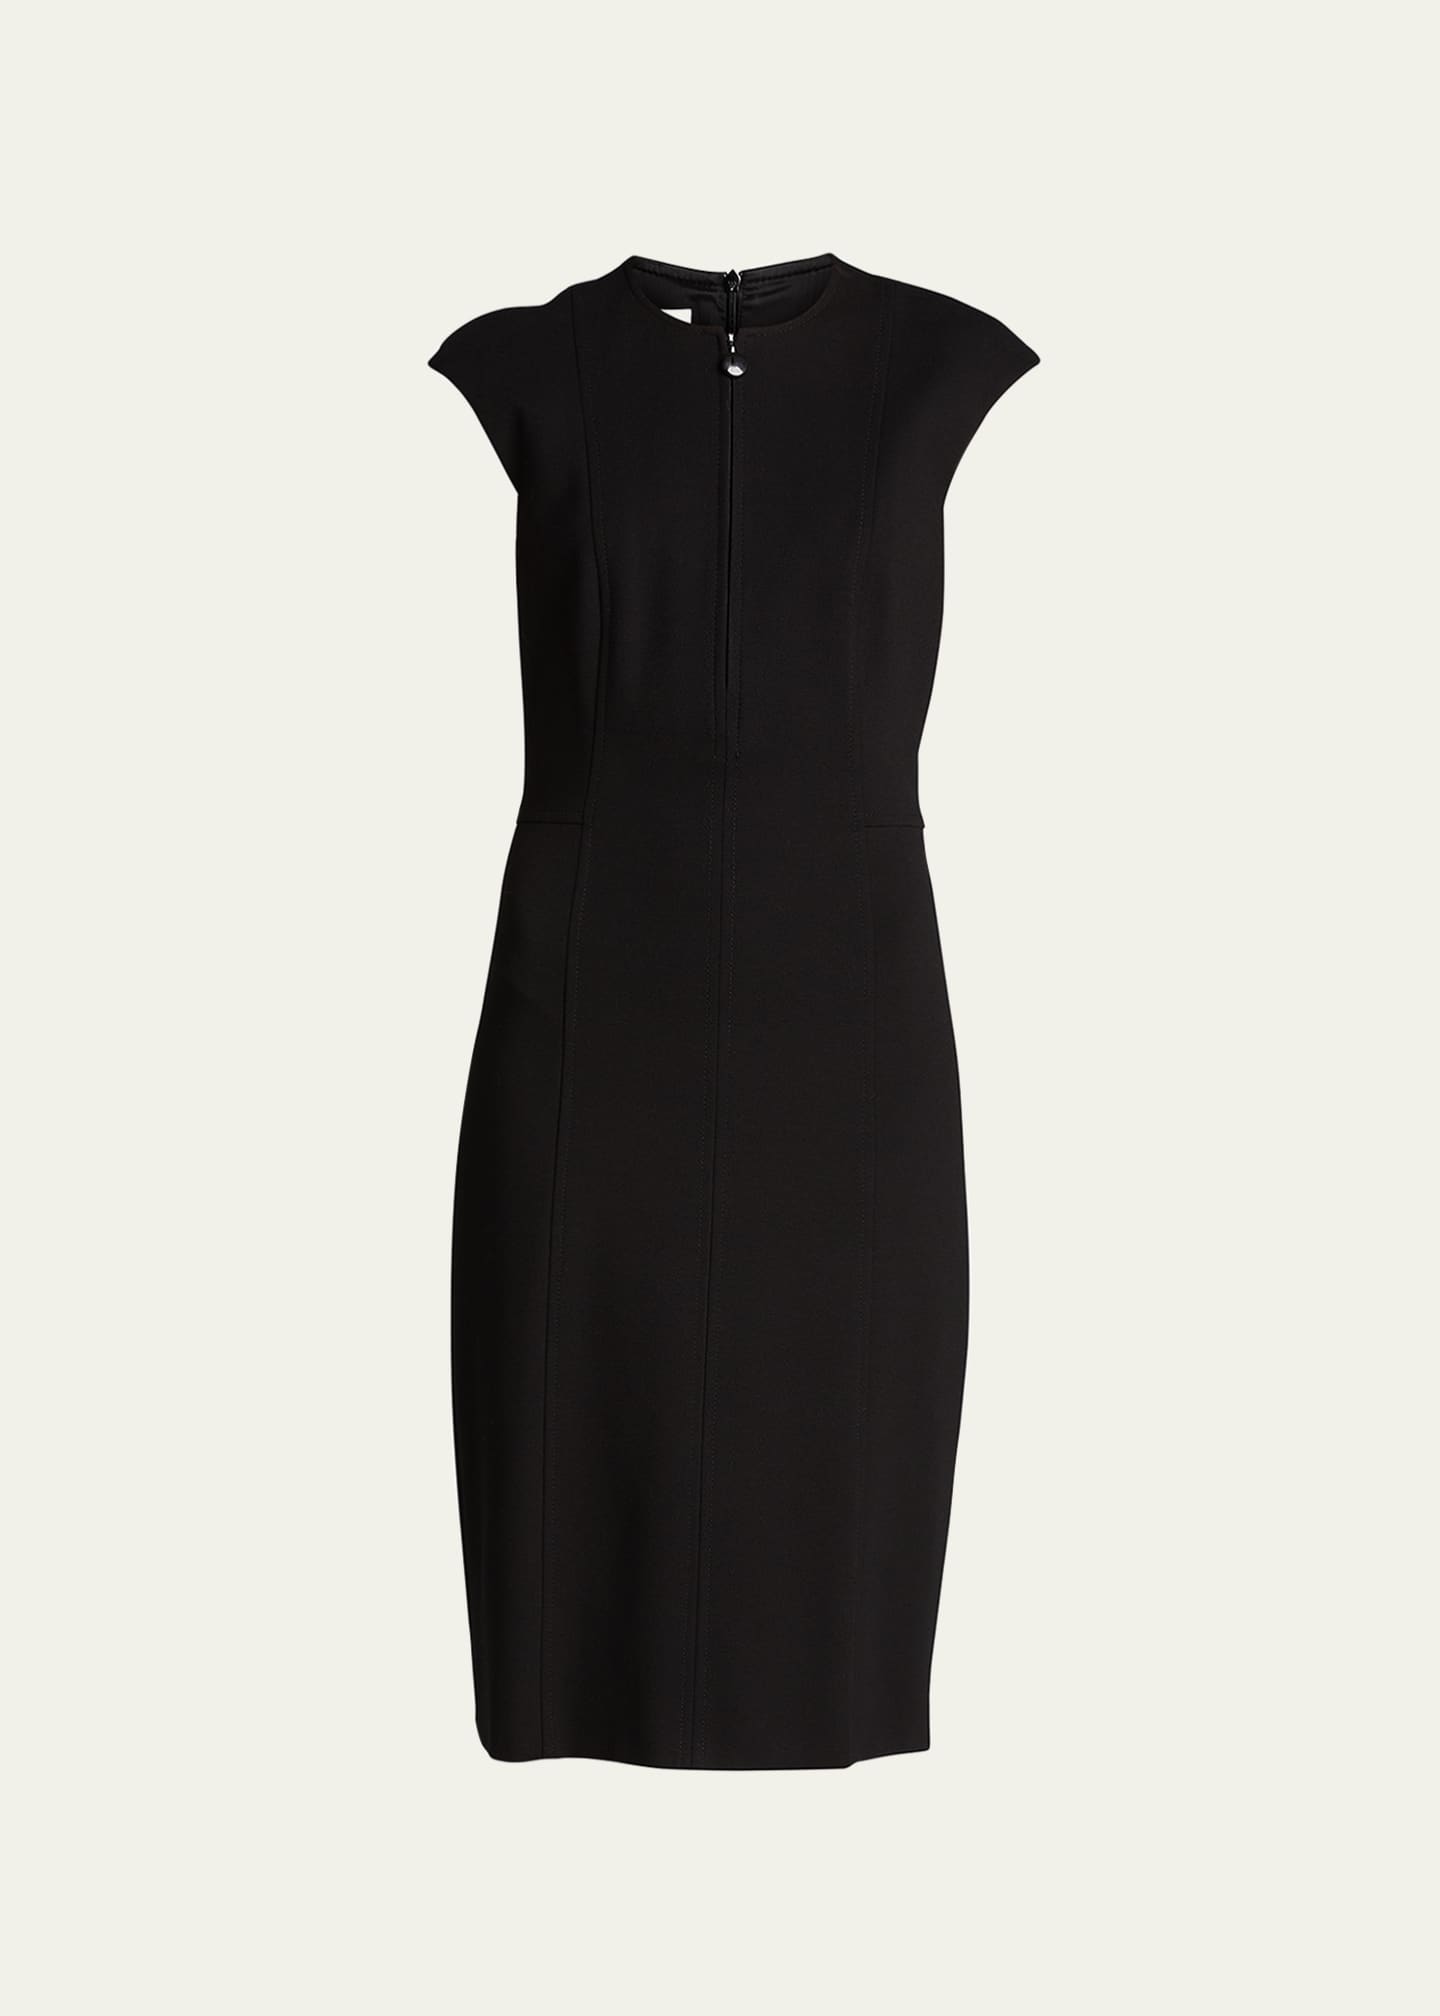 Akris punto Cap-Sleeve Zip-Front Seamed Dress, Black - Bergdorf Goodman